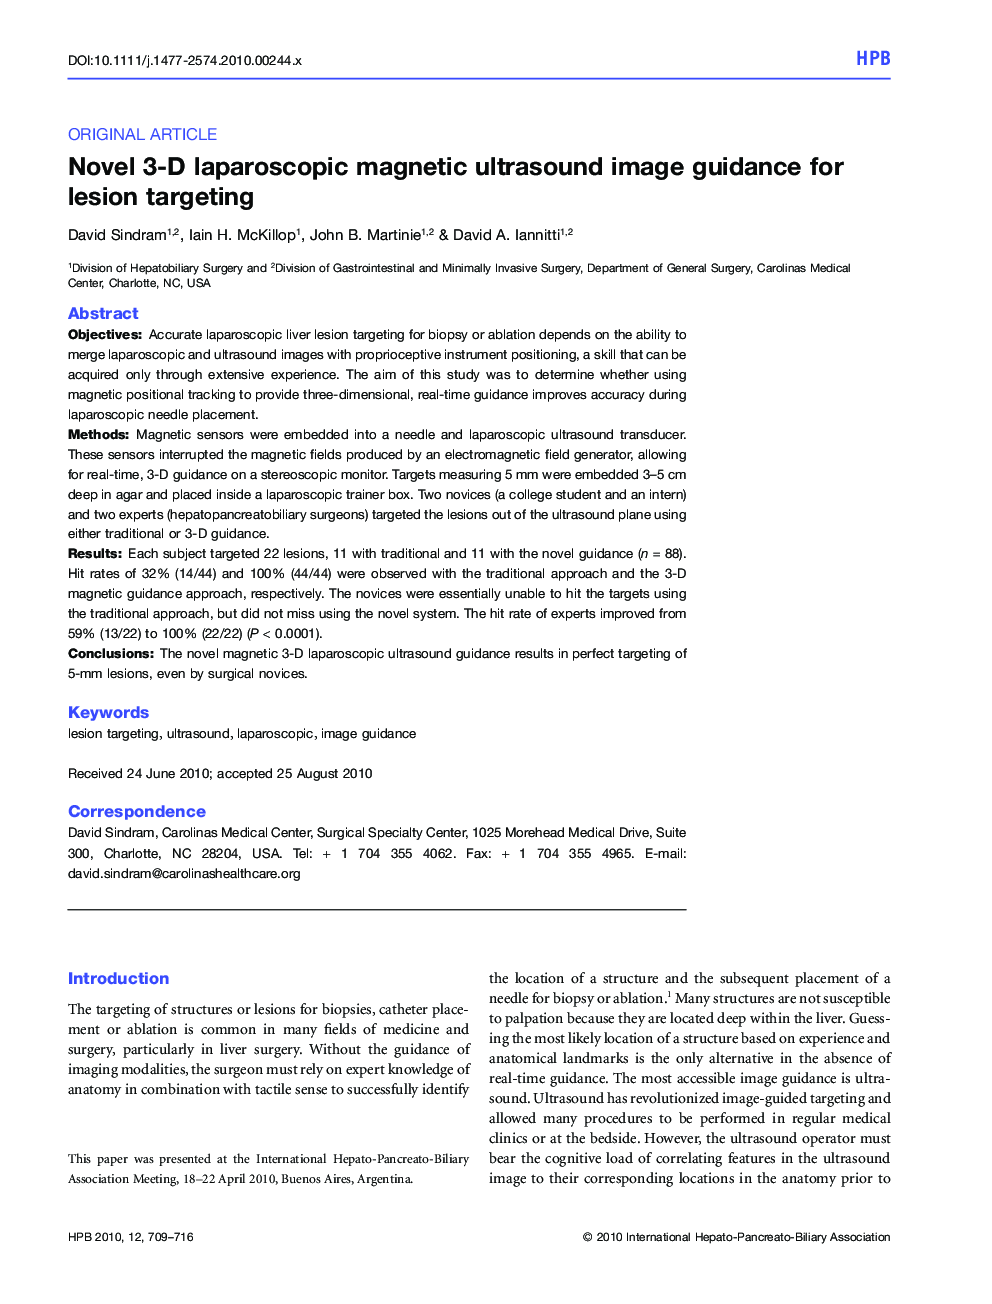 Novel 3-D laparoscopic magnetic ultrasound image guidance for lesion targeting